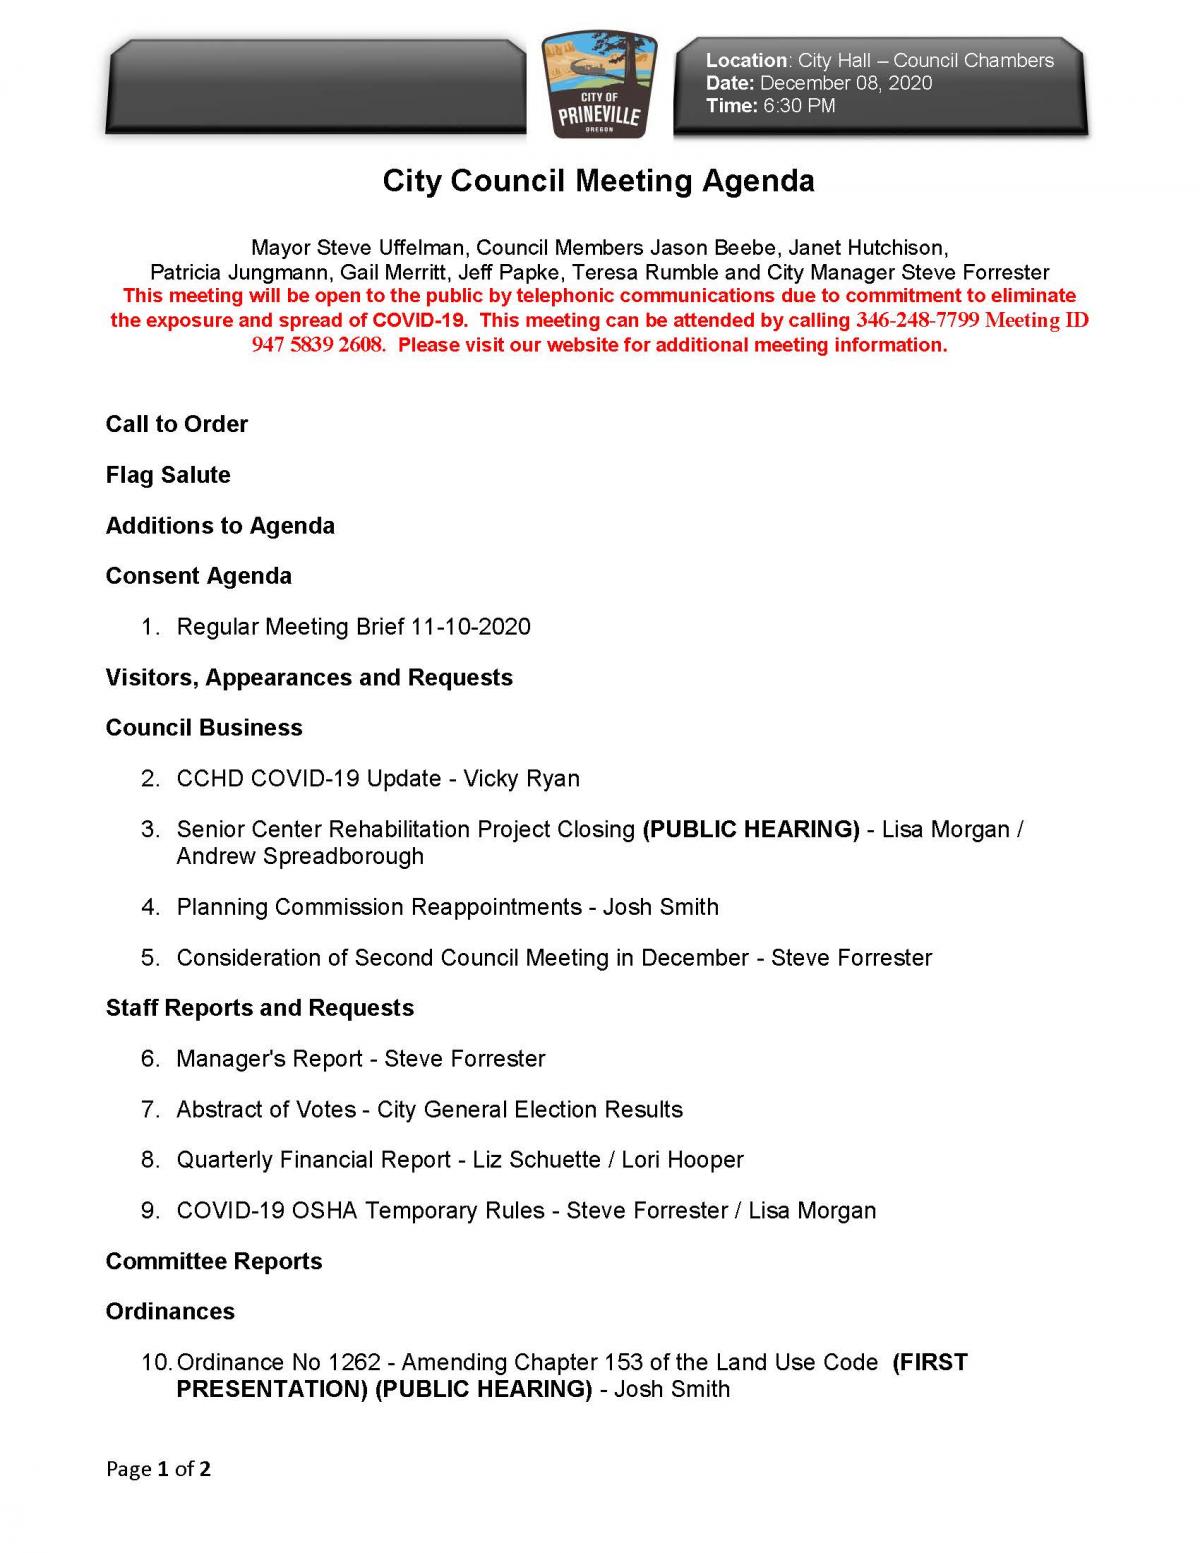 Council Agenda 12-8-2020